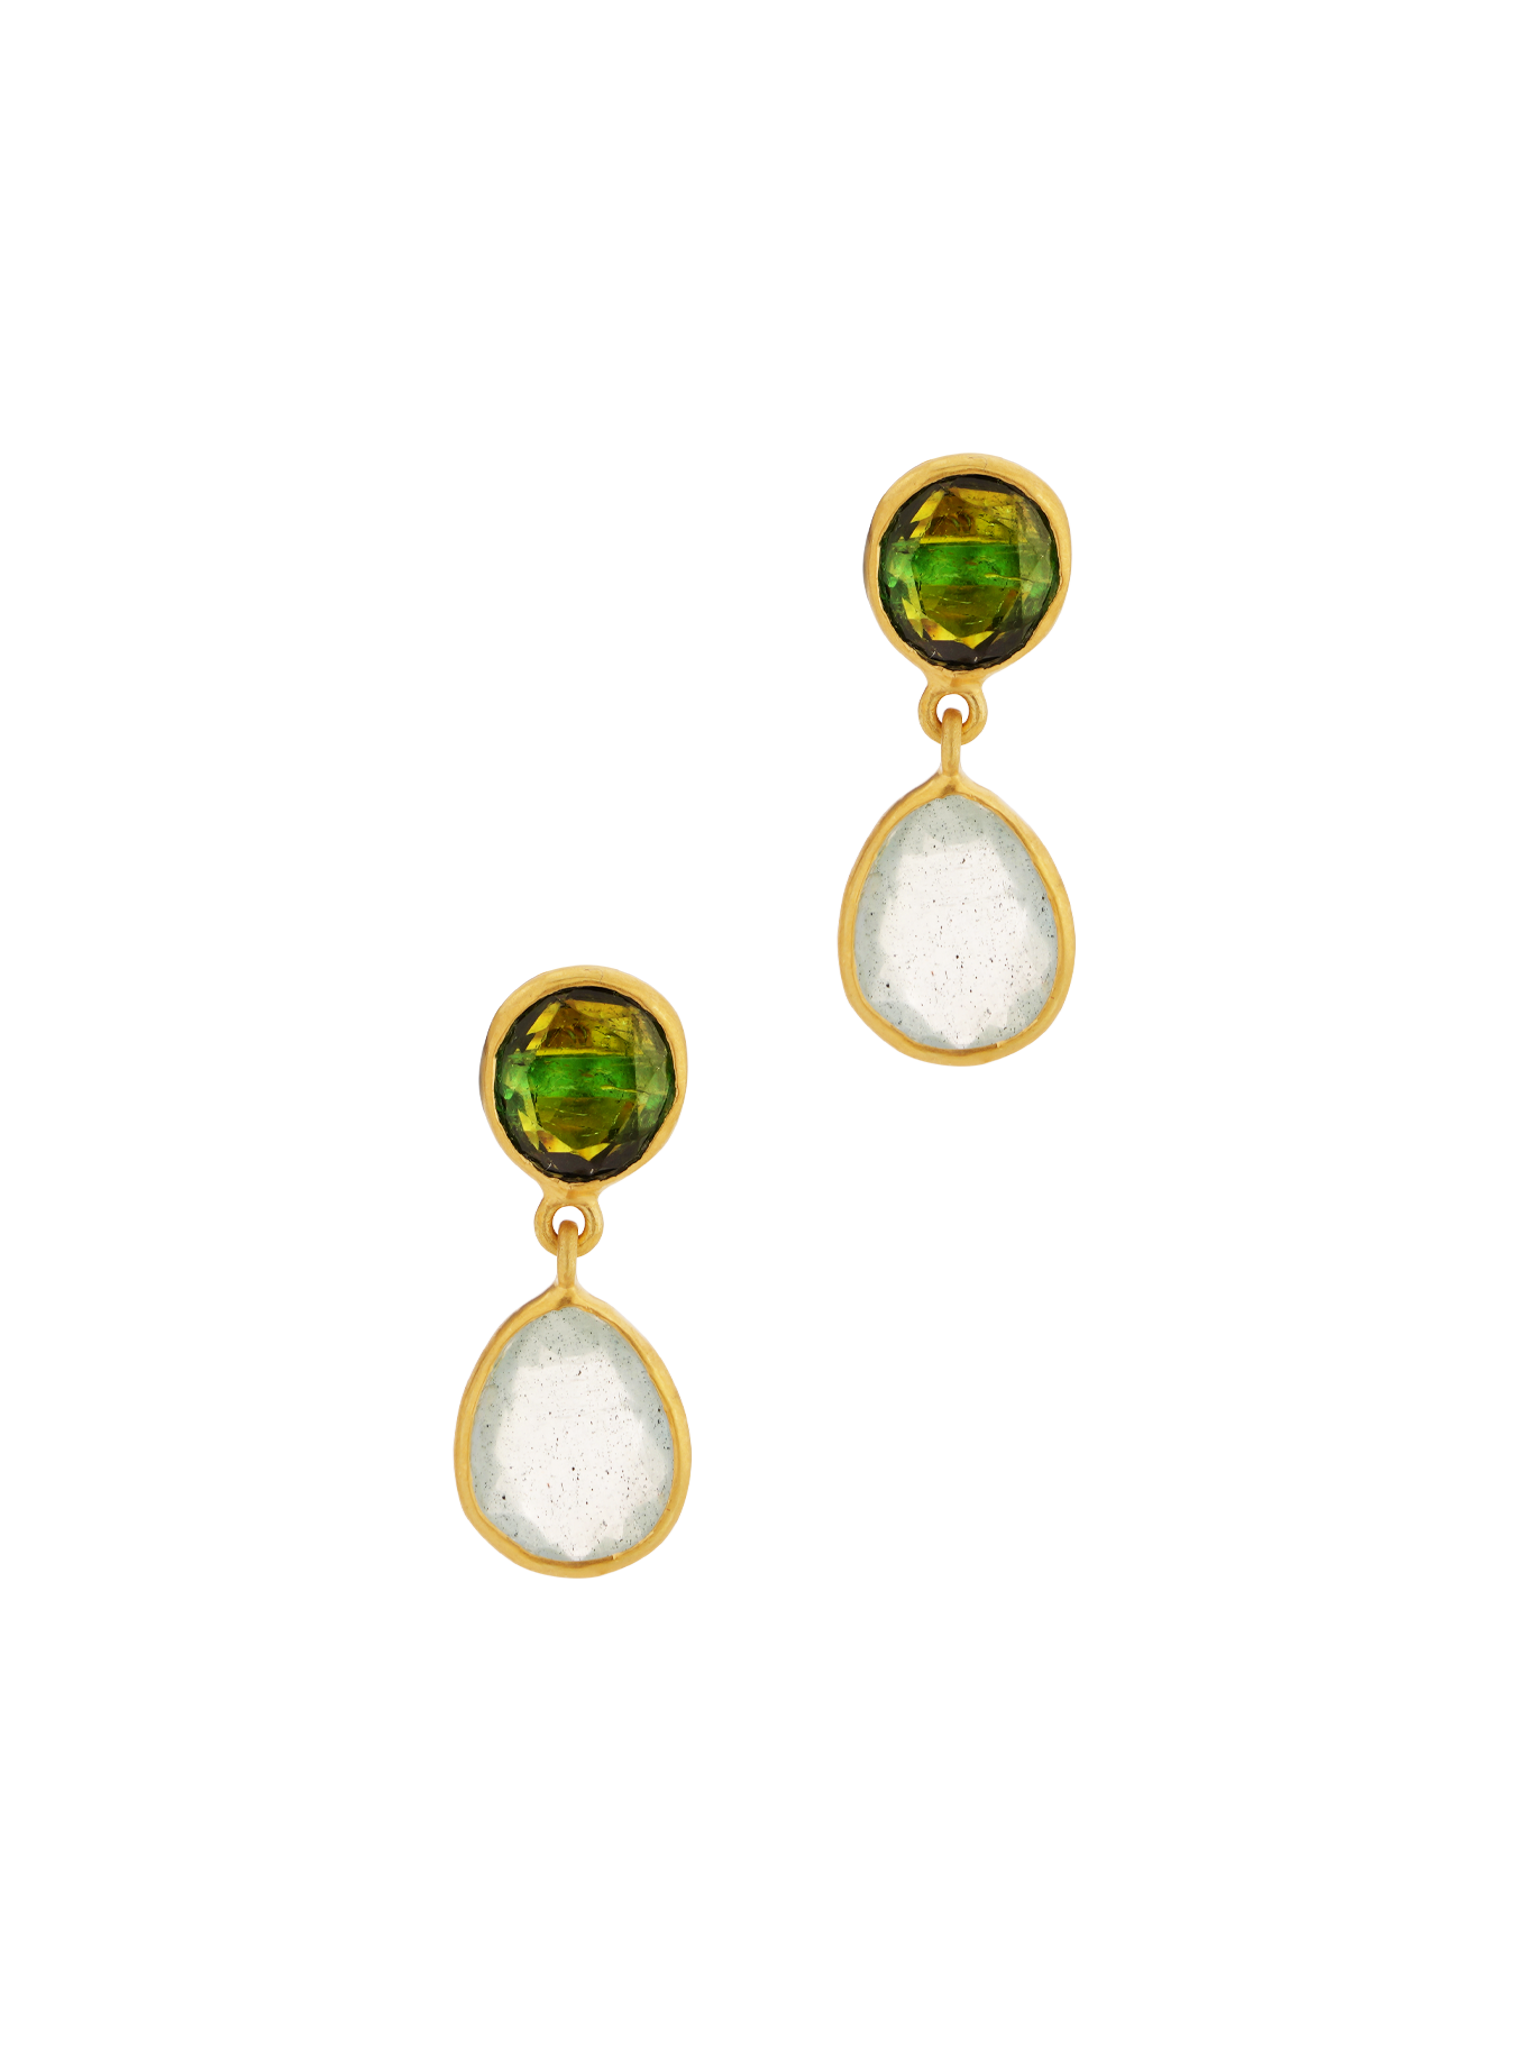 18kt gold aquamarine & green tourmaline drop earrings